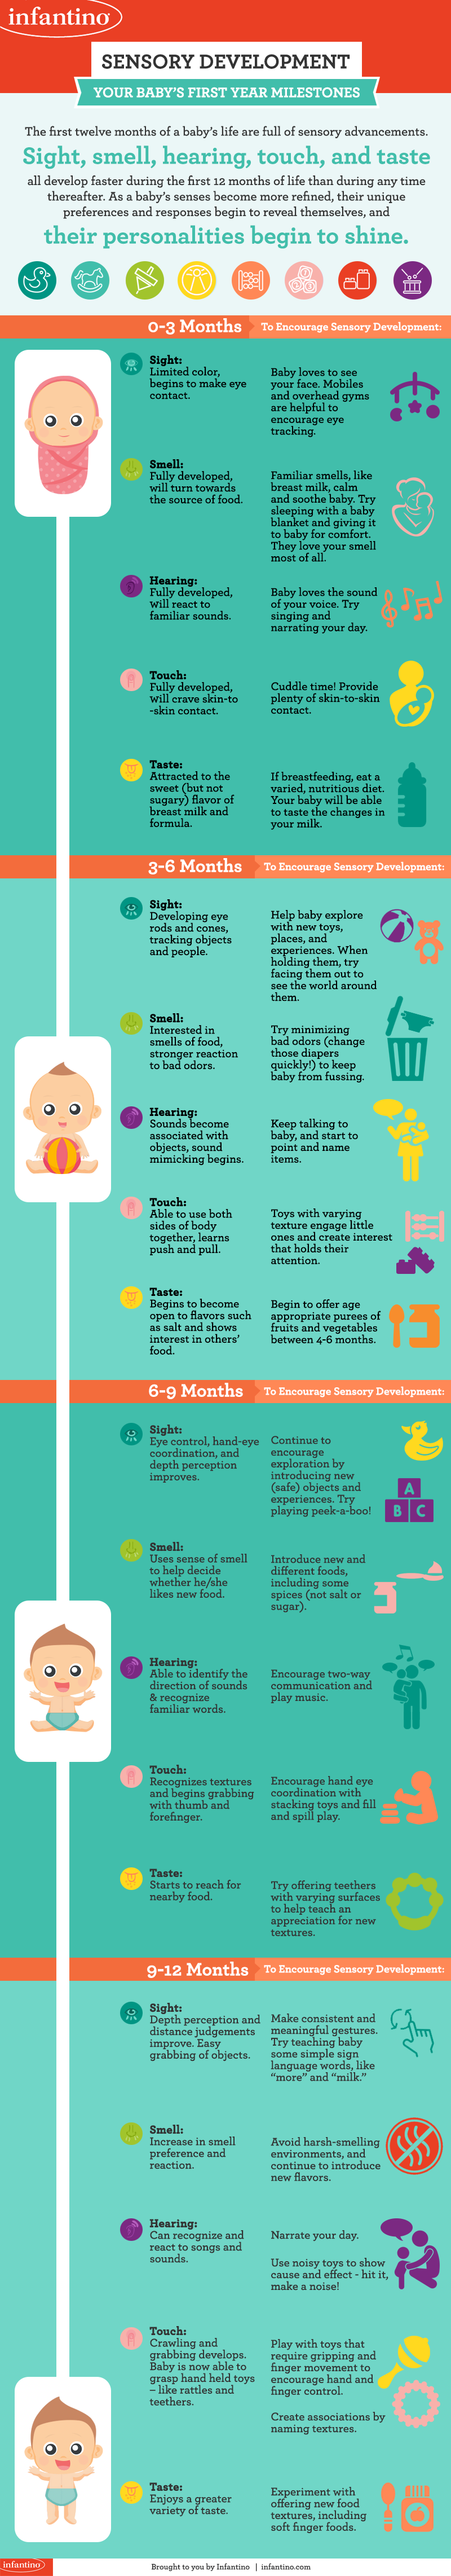 Sensory Development - Your Baby’s First Year Milestones [Infographic]